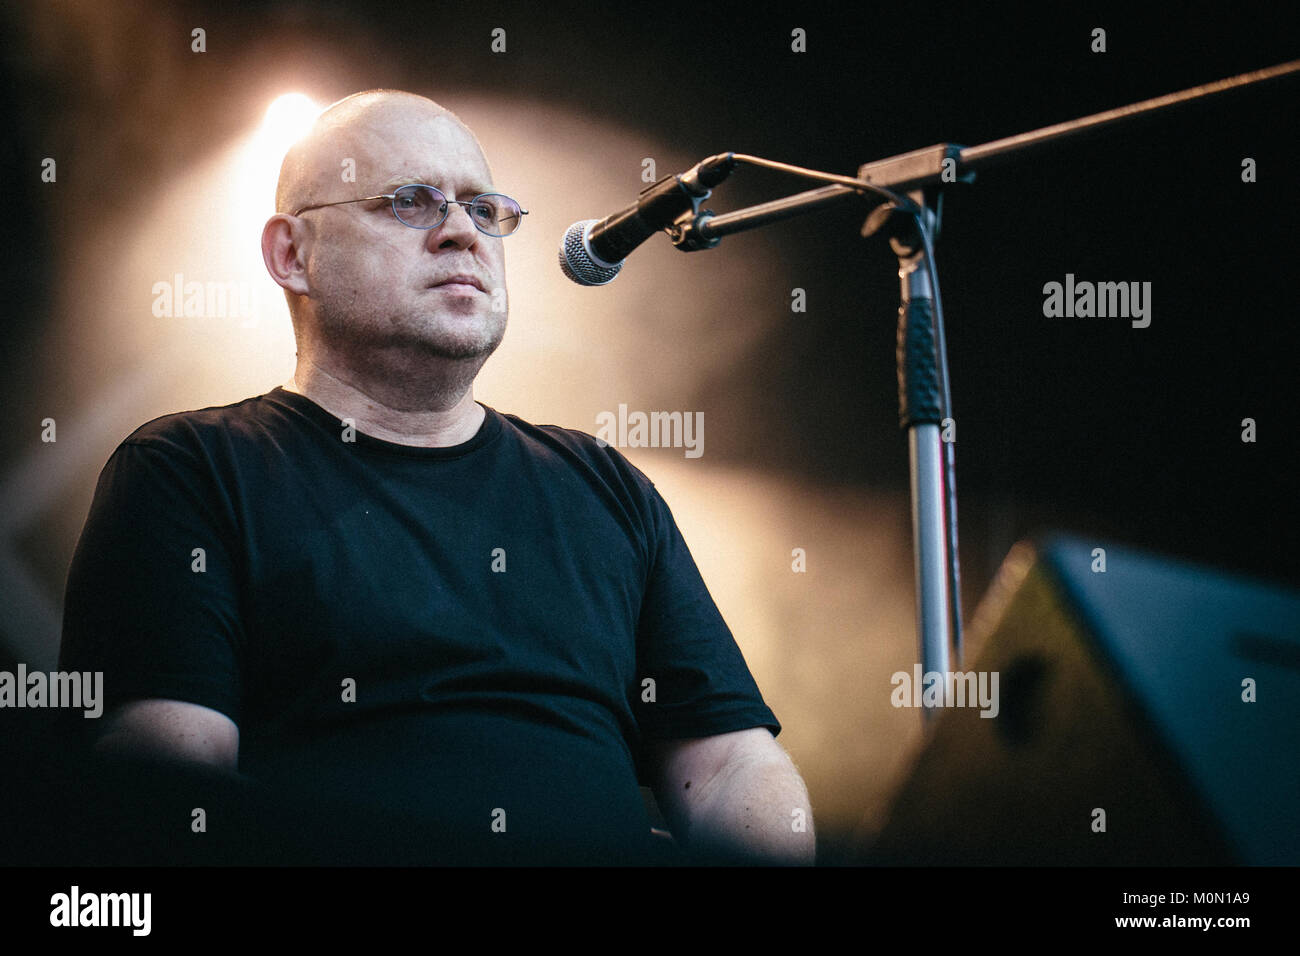 The Polish folk band Kwadrofonik performs a live concert featuring the Polish poet Adam Strug at the Polish music festival Off Festival 2015 in Katowice. Poland, 07/08 2015. Stock Photo